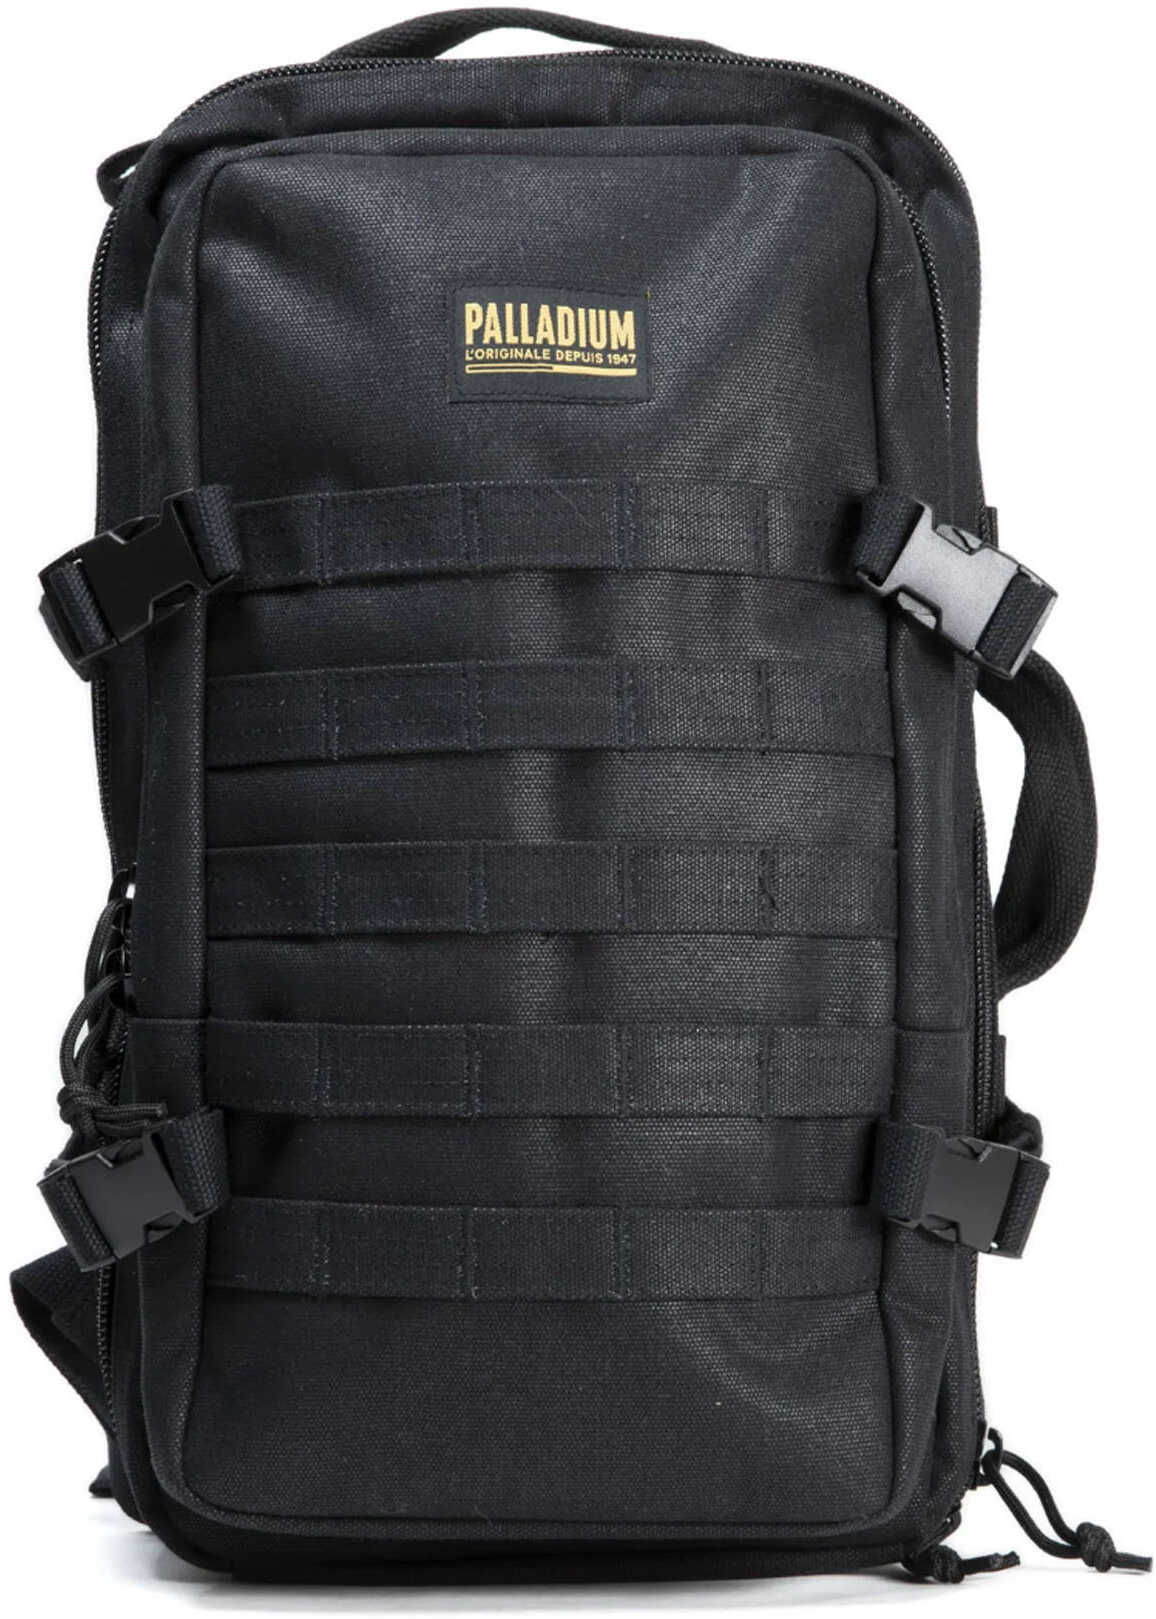 Palladium Palladiium BAROUDEUR CVS BG222 - 001 Black